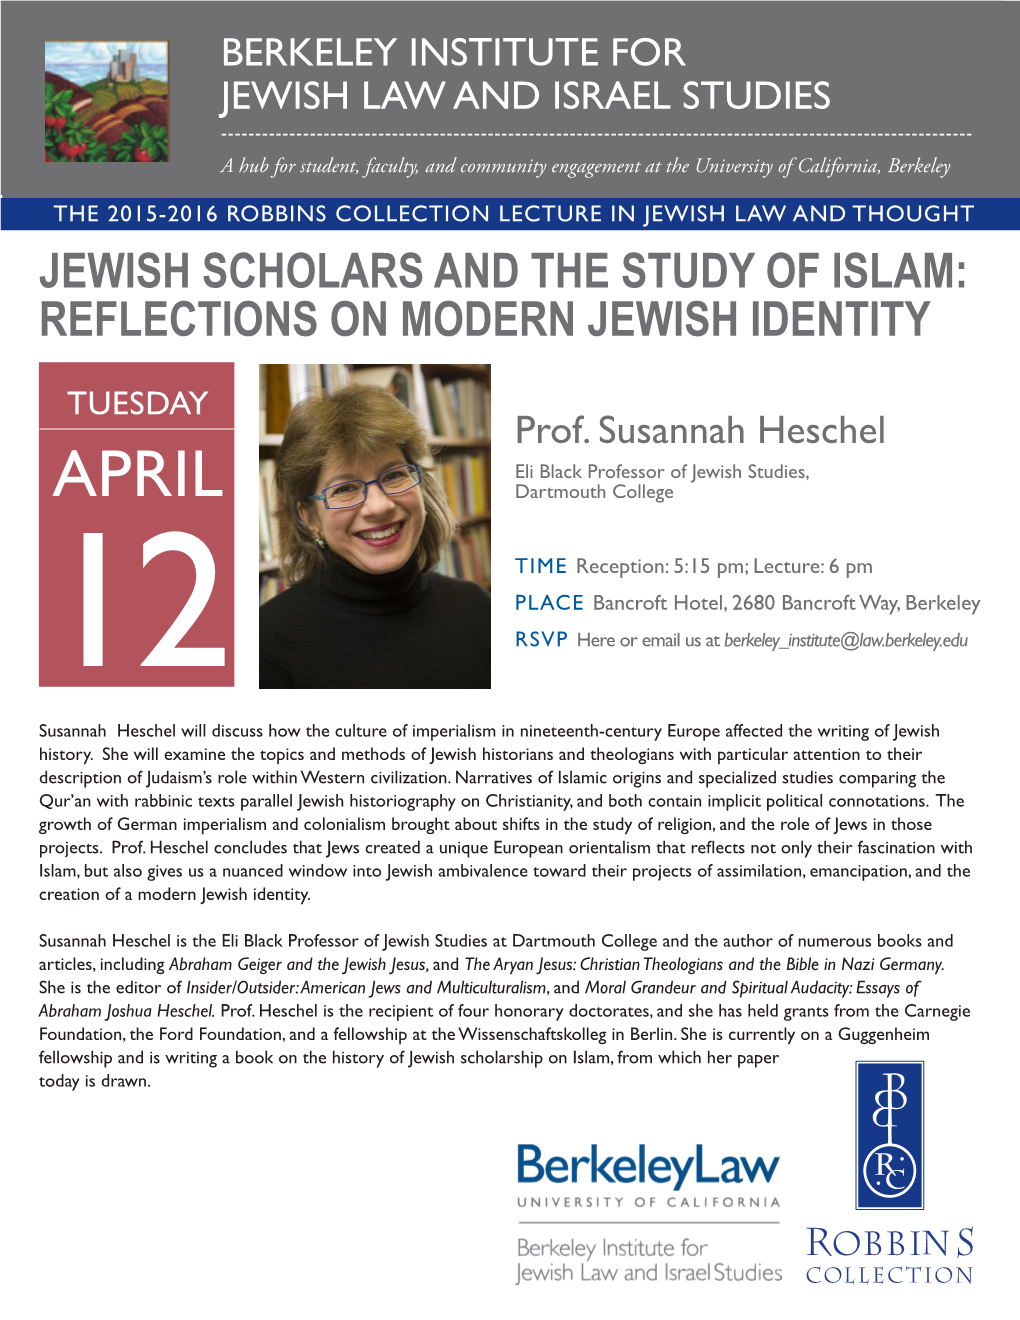 Reflections on Modern Jewish Identity